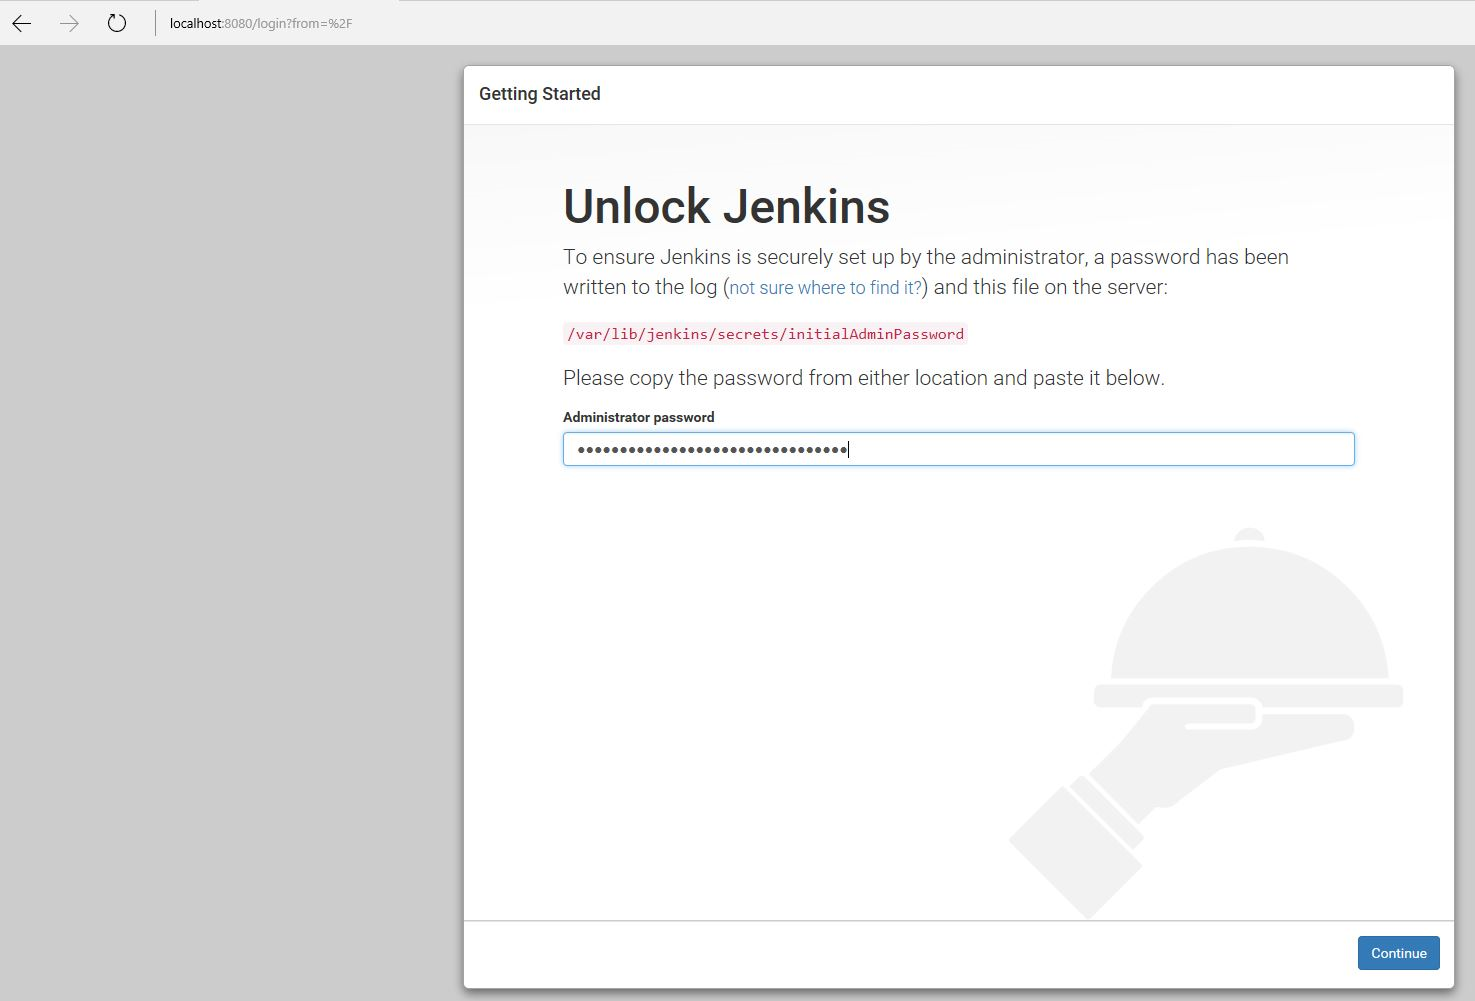 Initial jenkins admin password